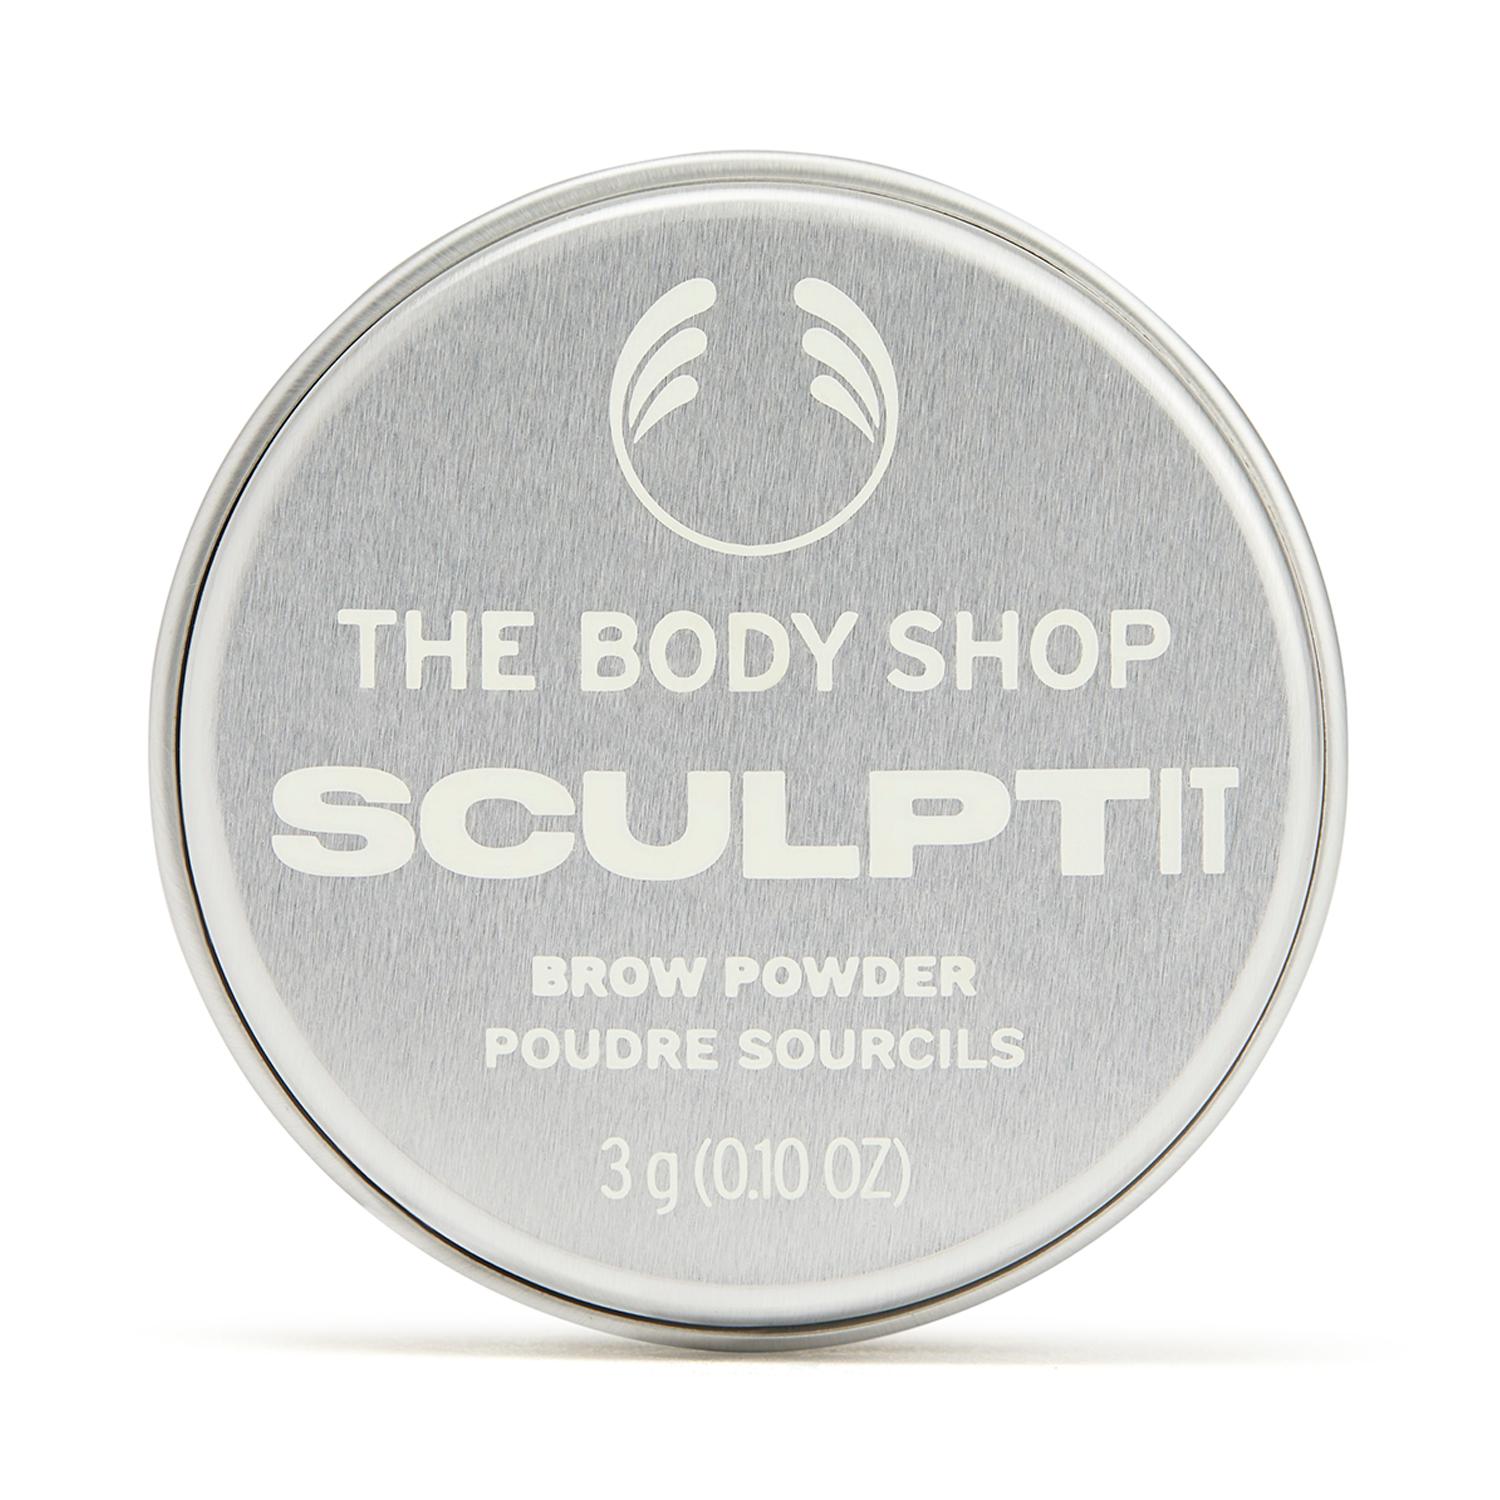 The Body Shop | The Body Shop Sculpt It Brow Powder - Cool Brown (3 g)